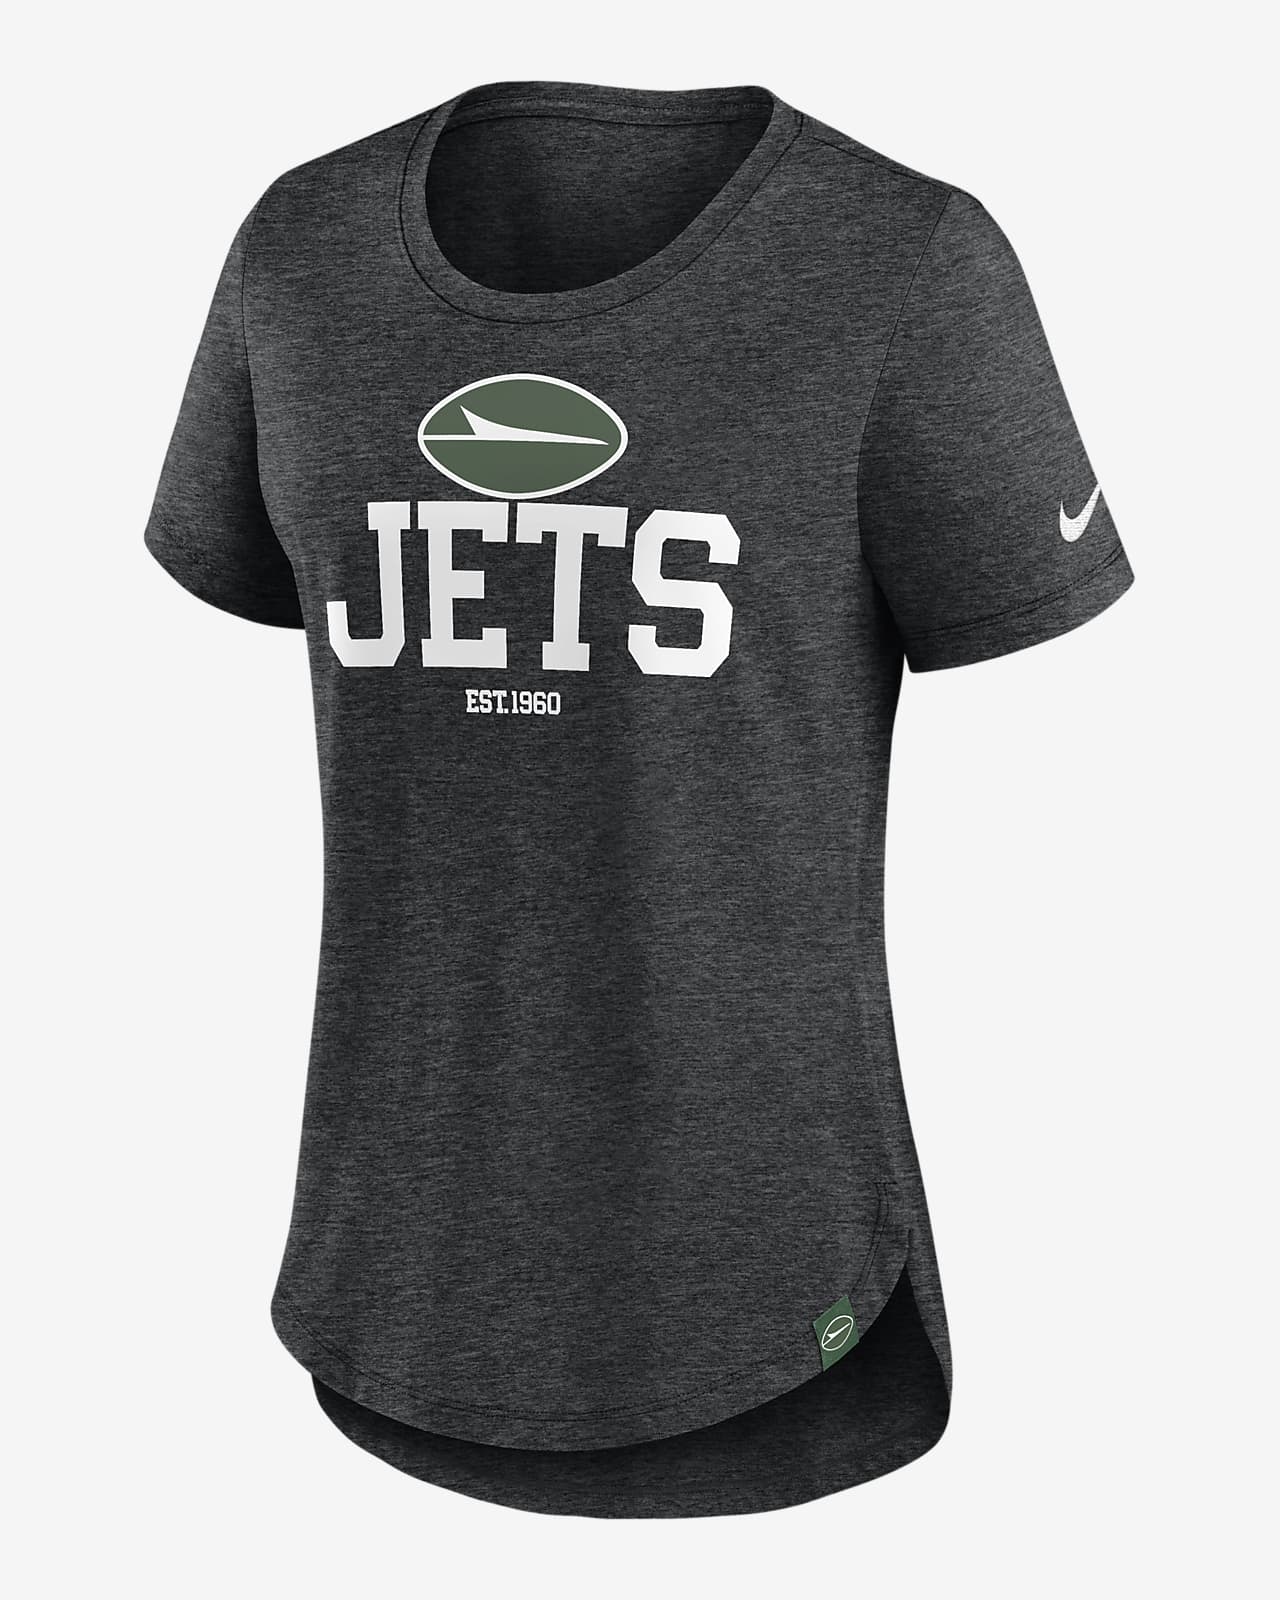 New York Jets Women's Nike NFL T-Shirt